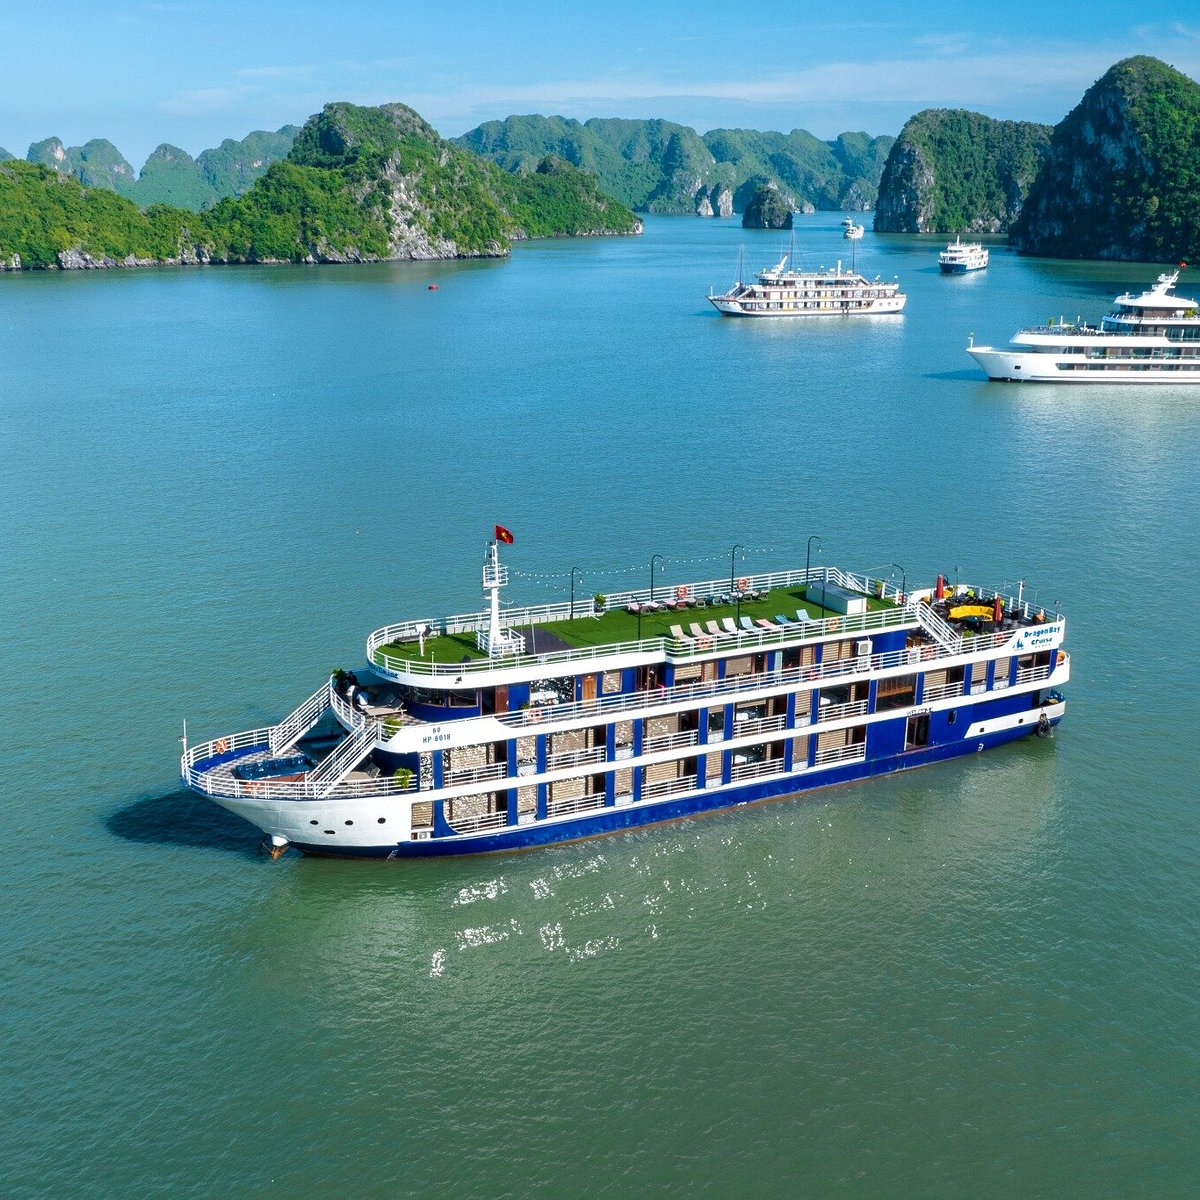 danga bay cruise ticket price 2022